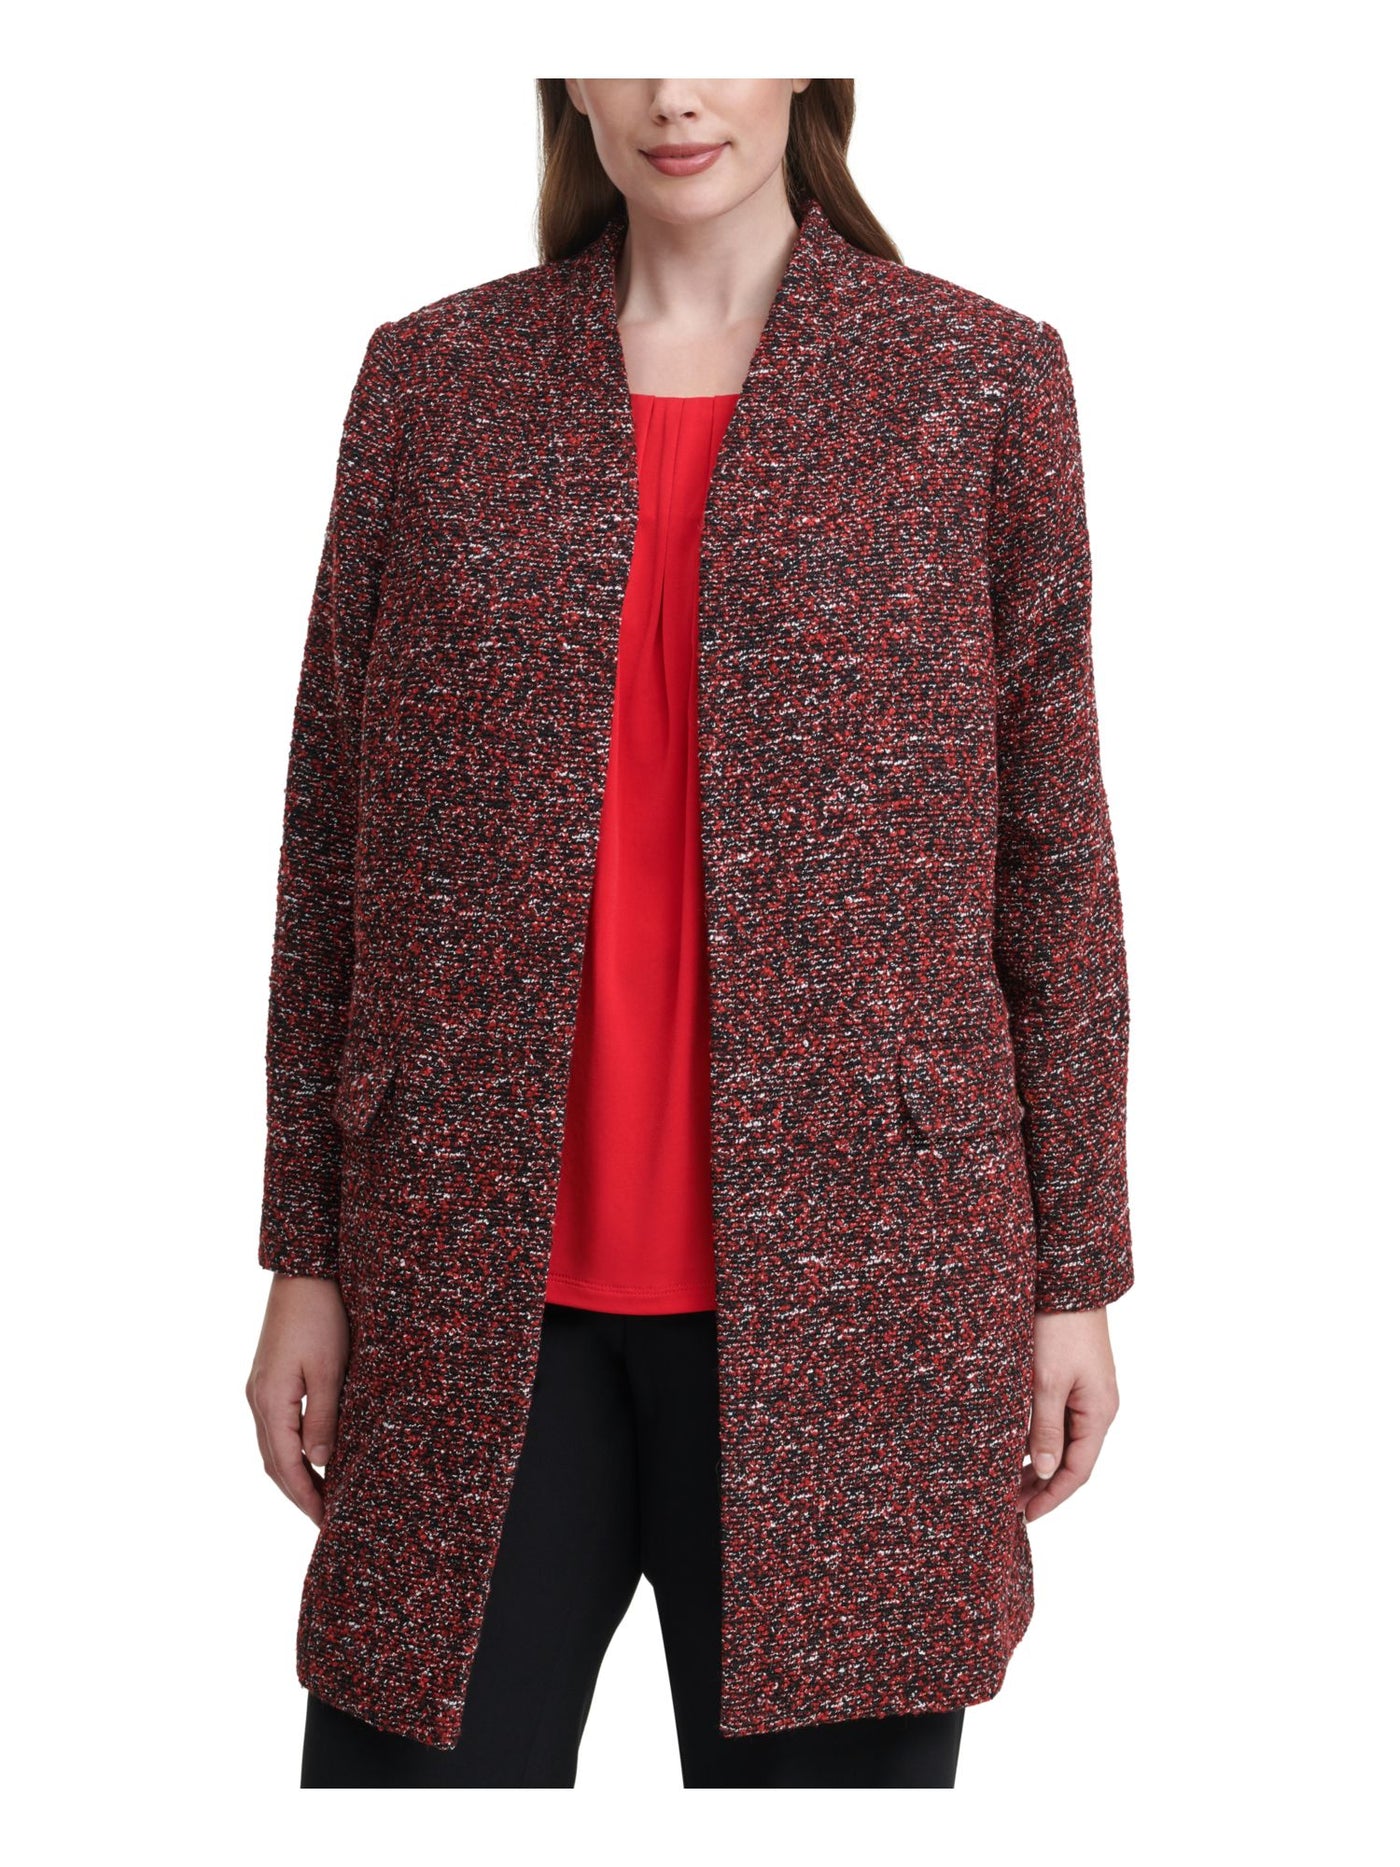 CALVIN KLEIN Womens Red Long Sleeve Open Cardigan Sweater Plus Size: 16W